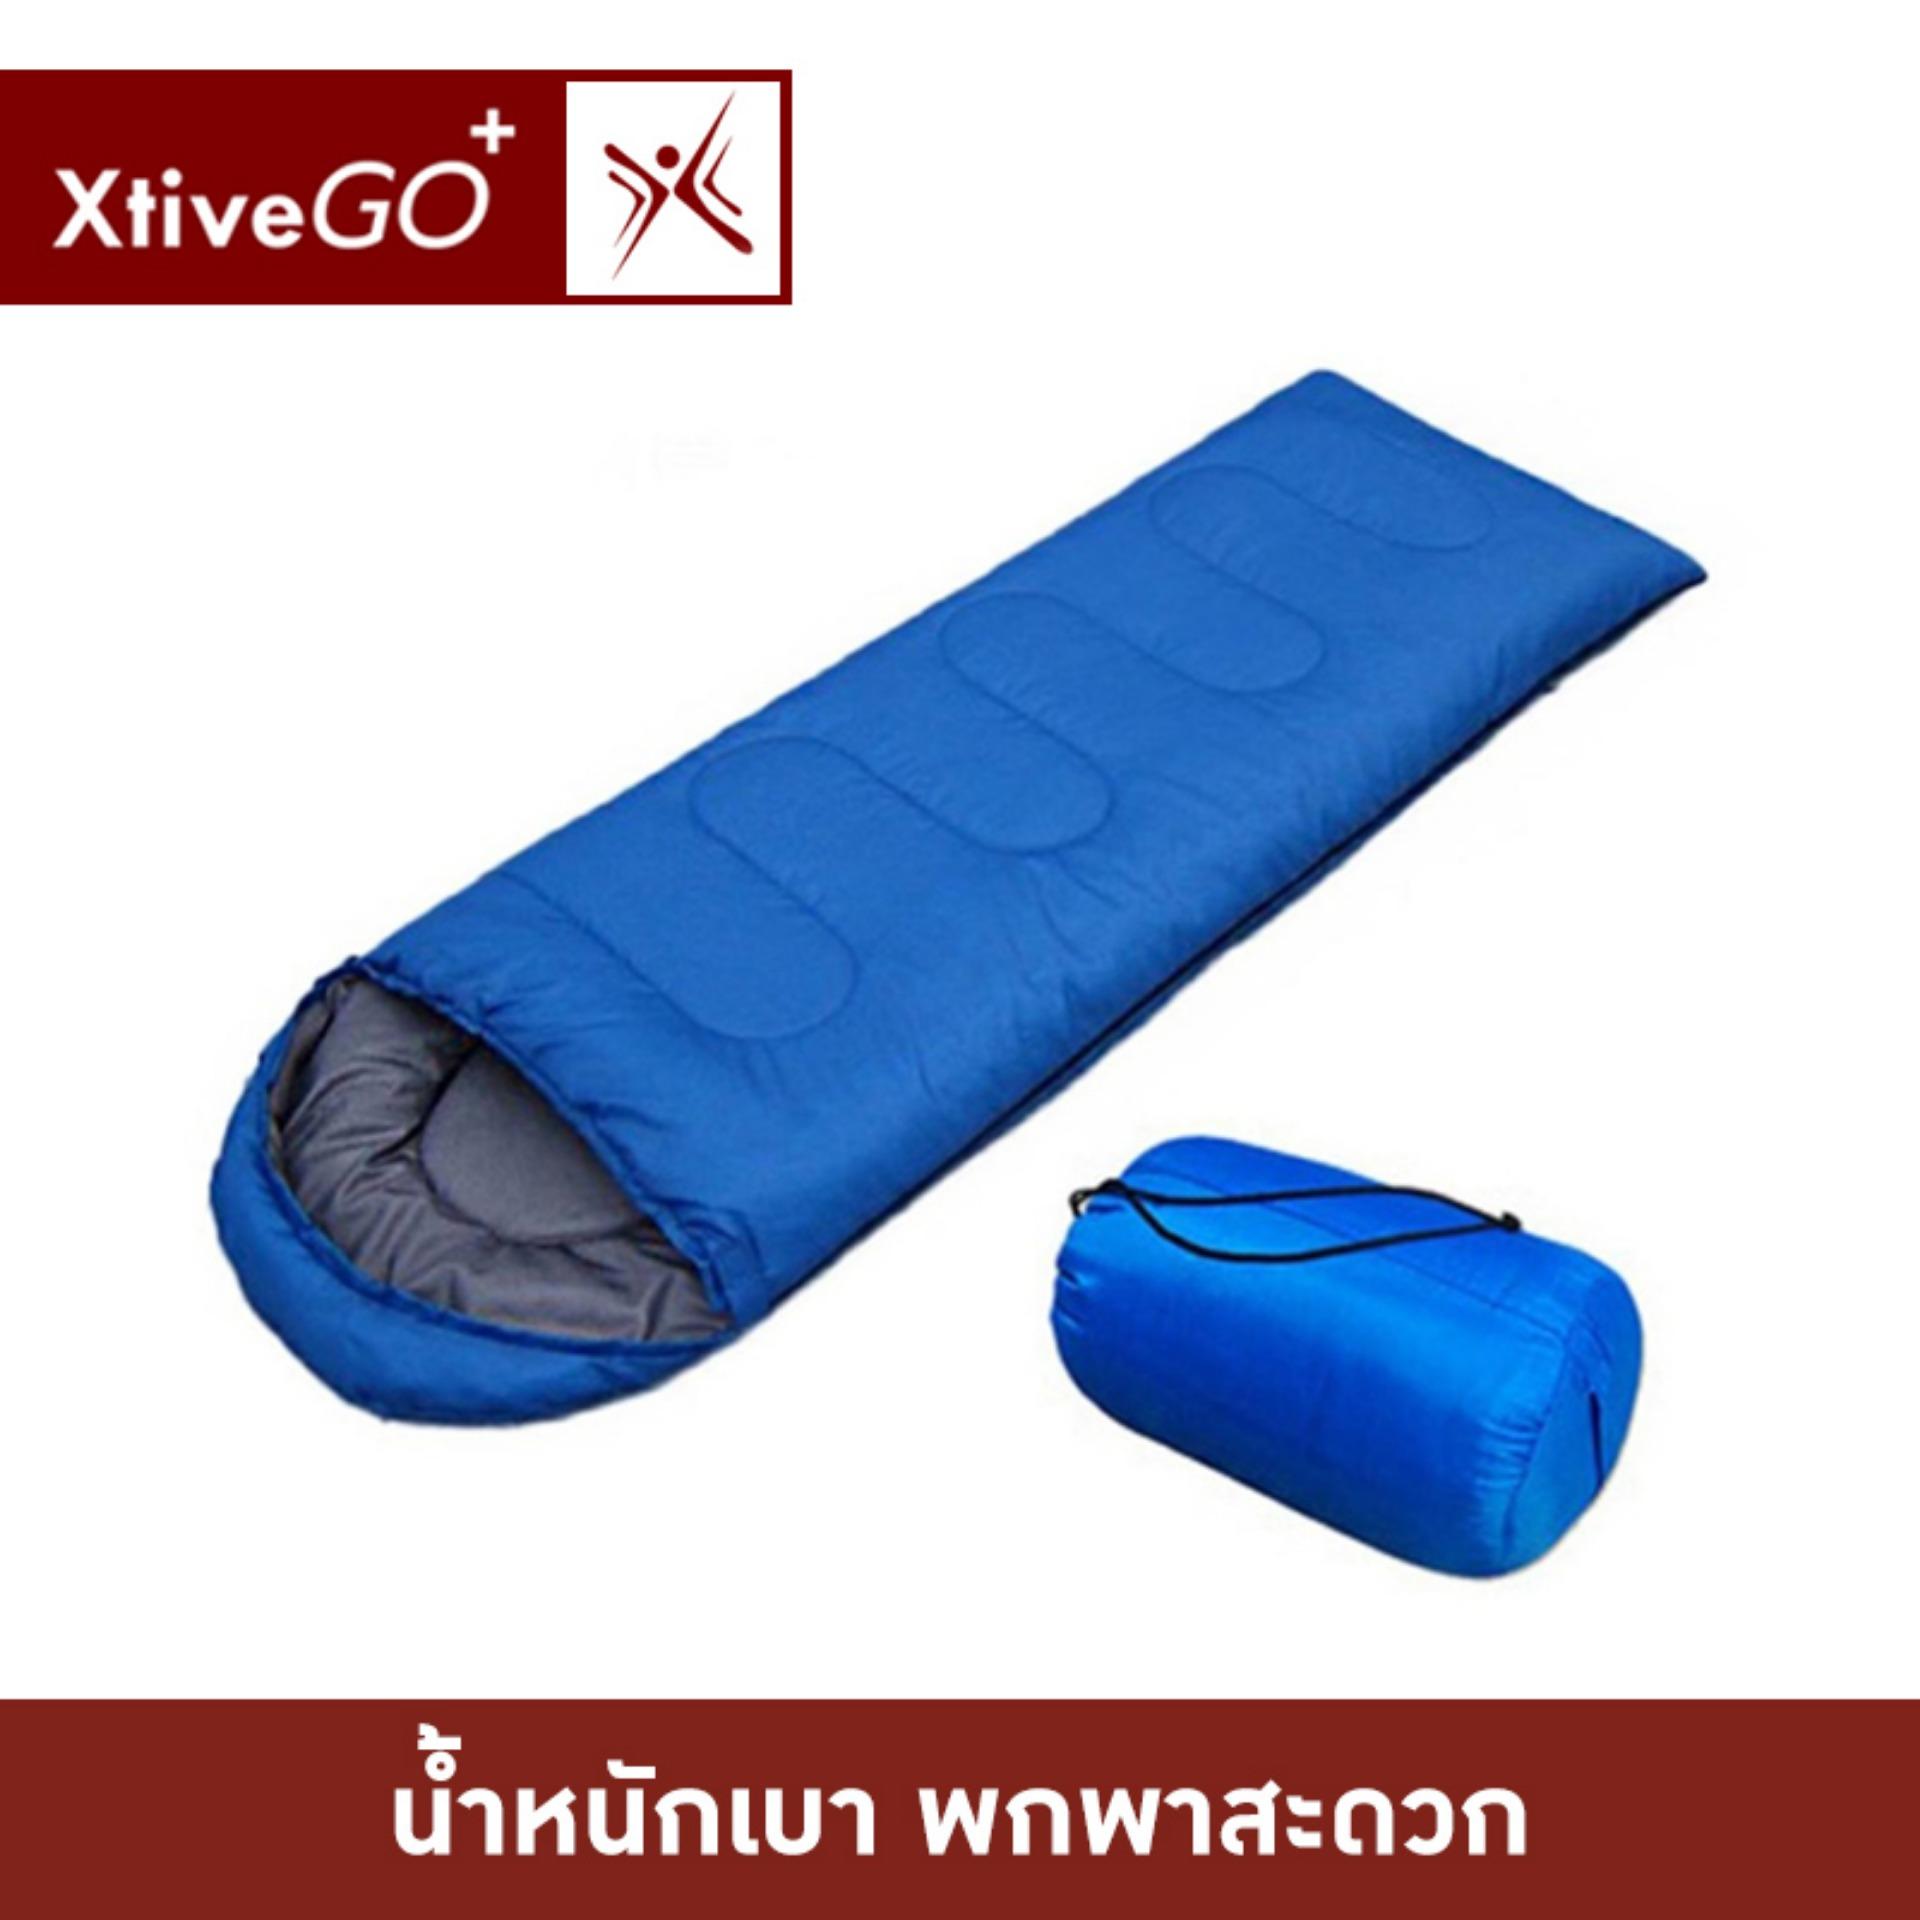 XtiveGo Sleeping Bag Blue ถุงนอน แบบพกพา สำหรับเดินทาง มี 2 สีให้เลือก